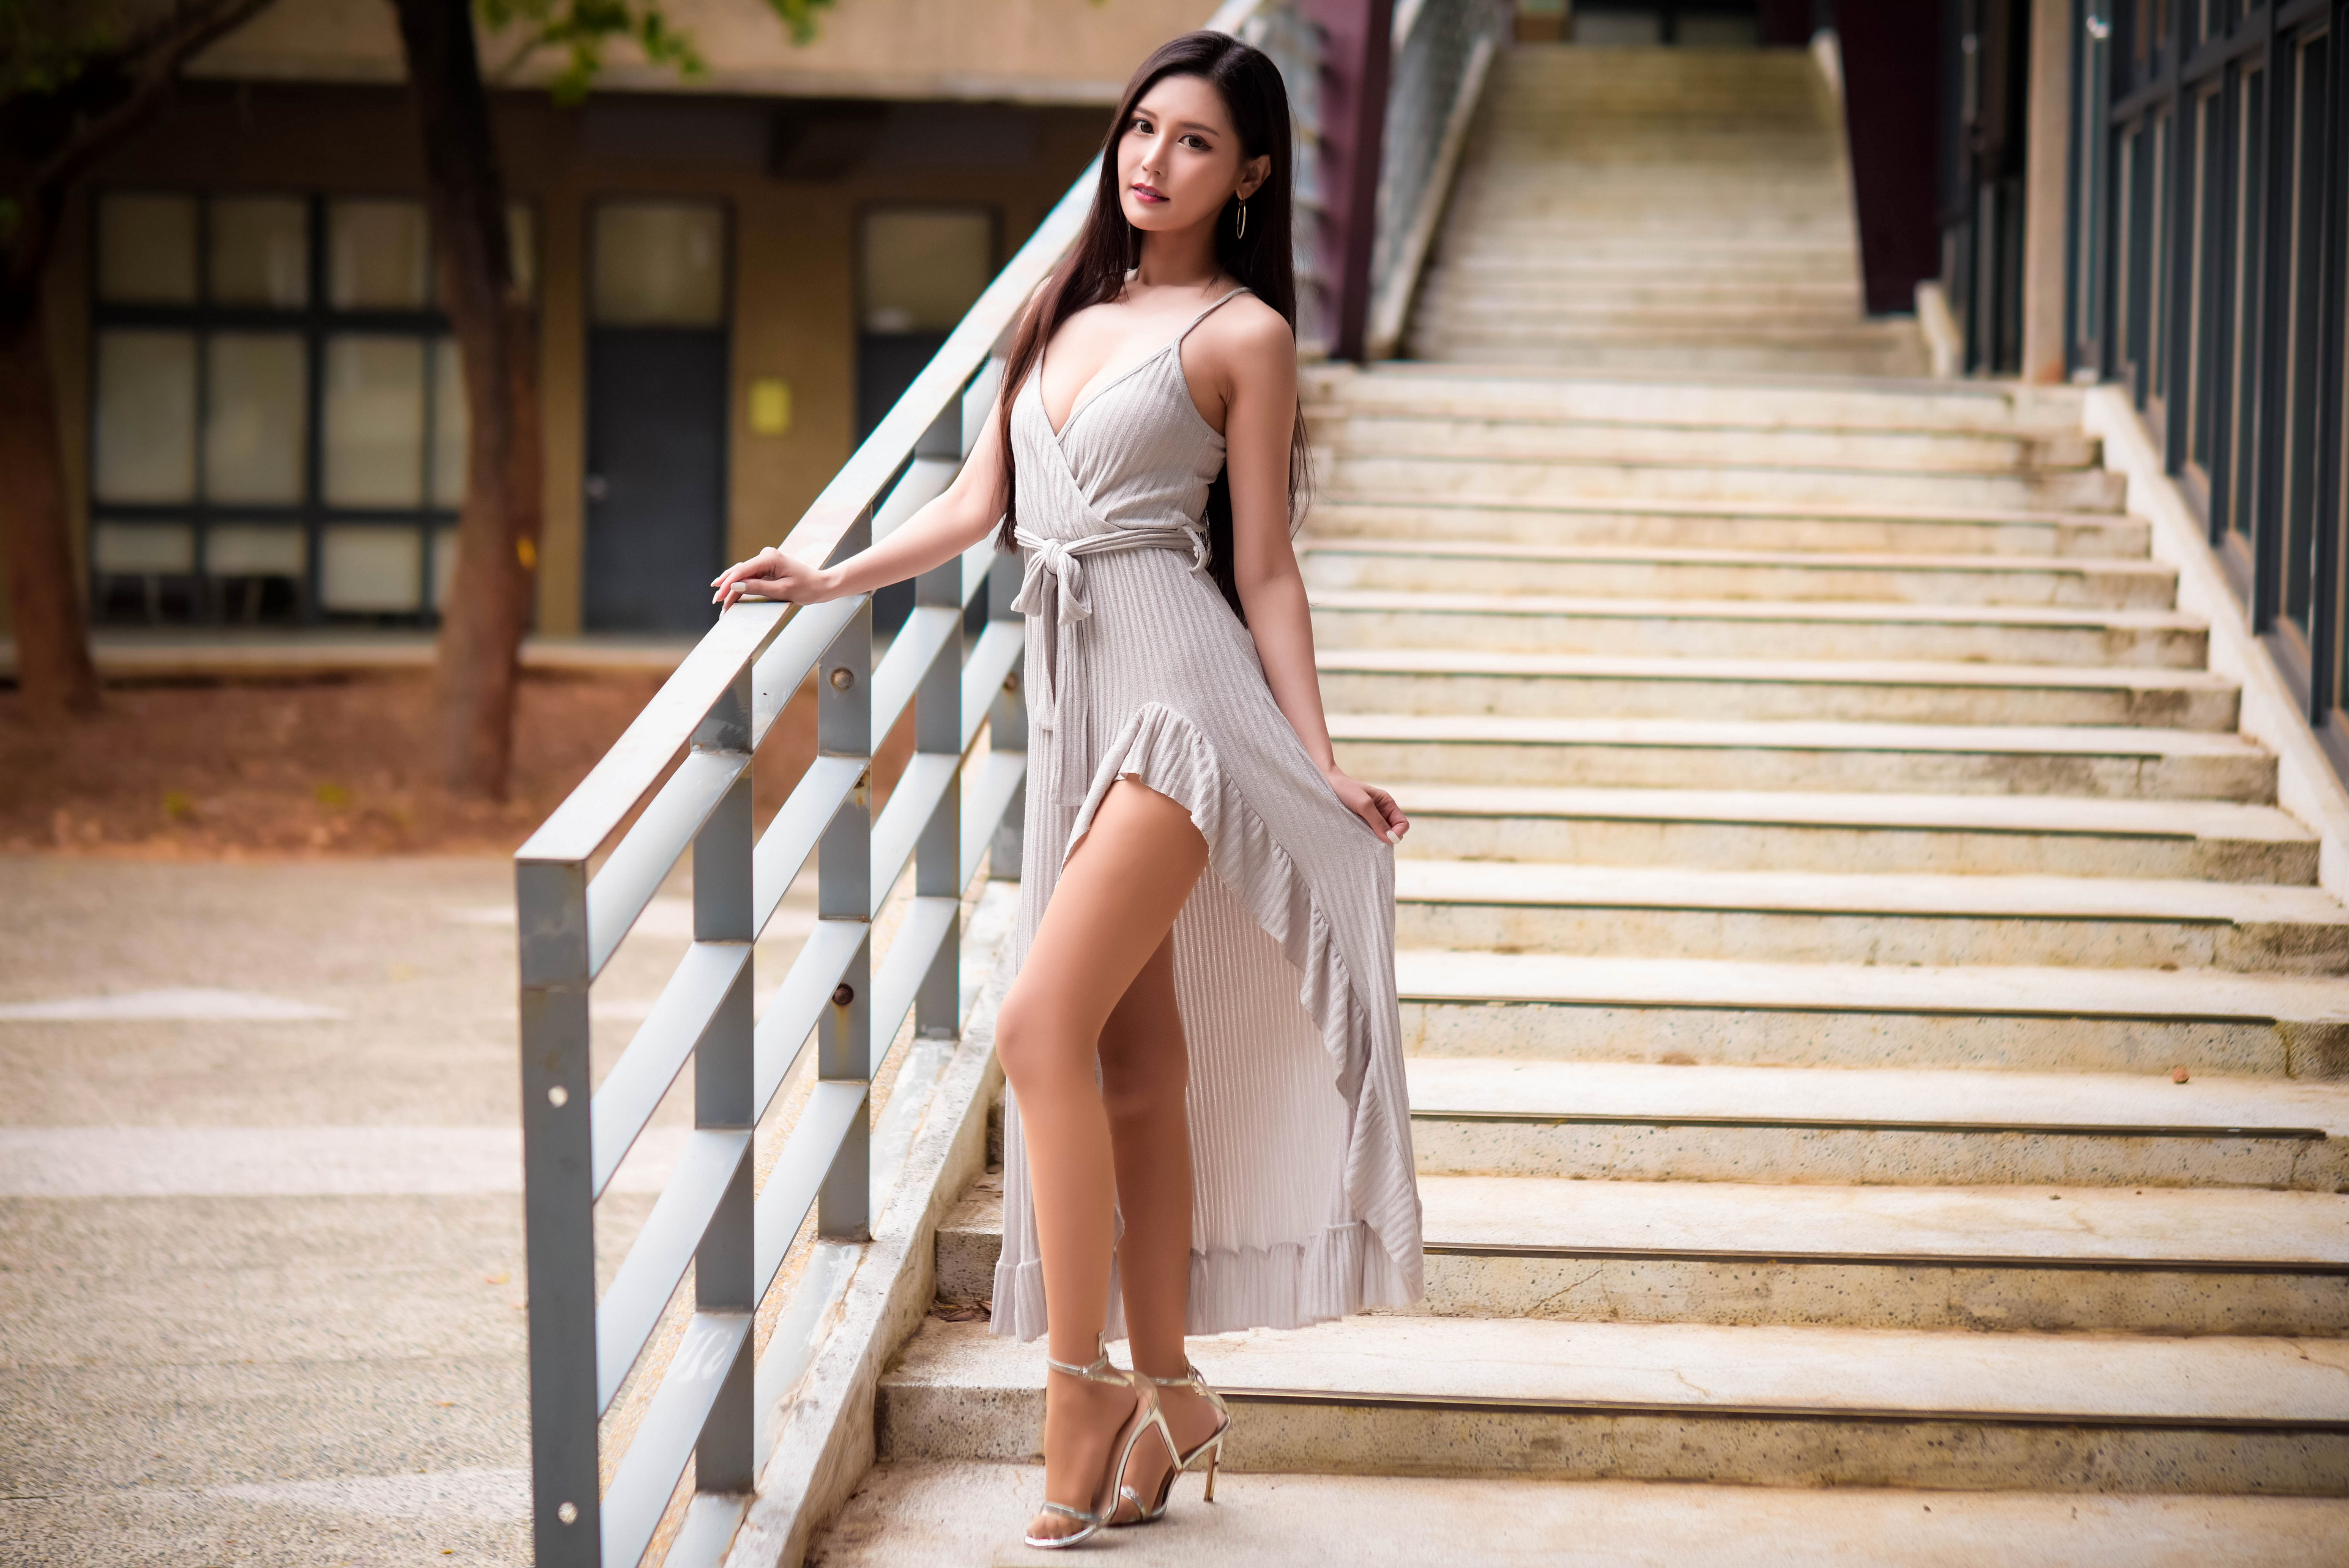 Asian Model Women Long Hair Dark Hair Stairs Iron Railing Legs Dress 3840x2563